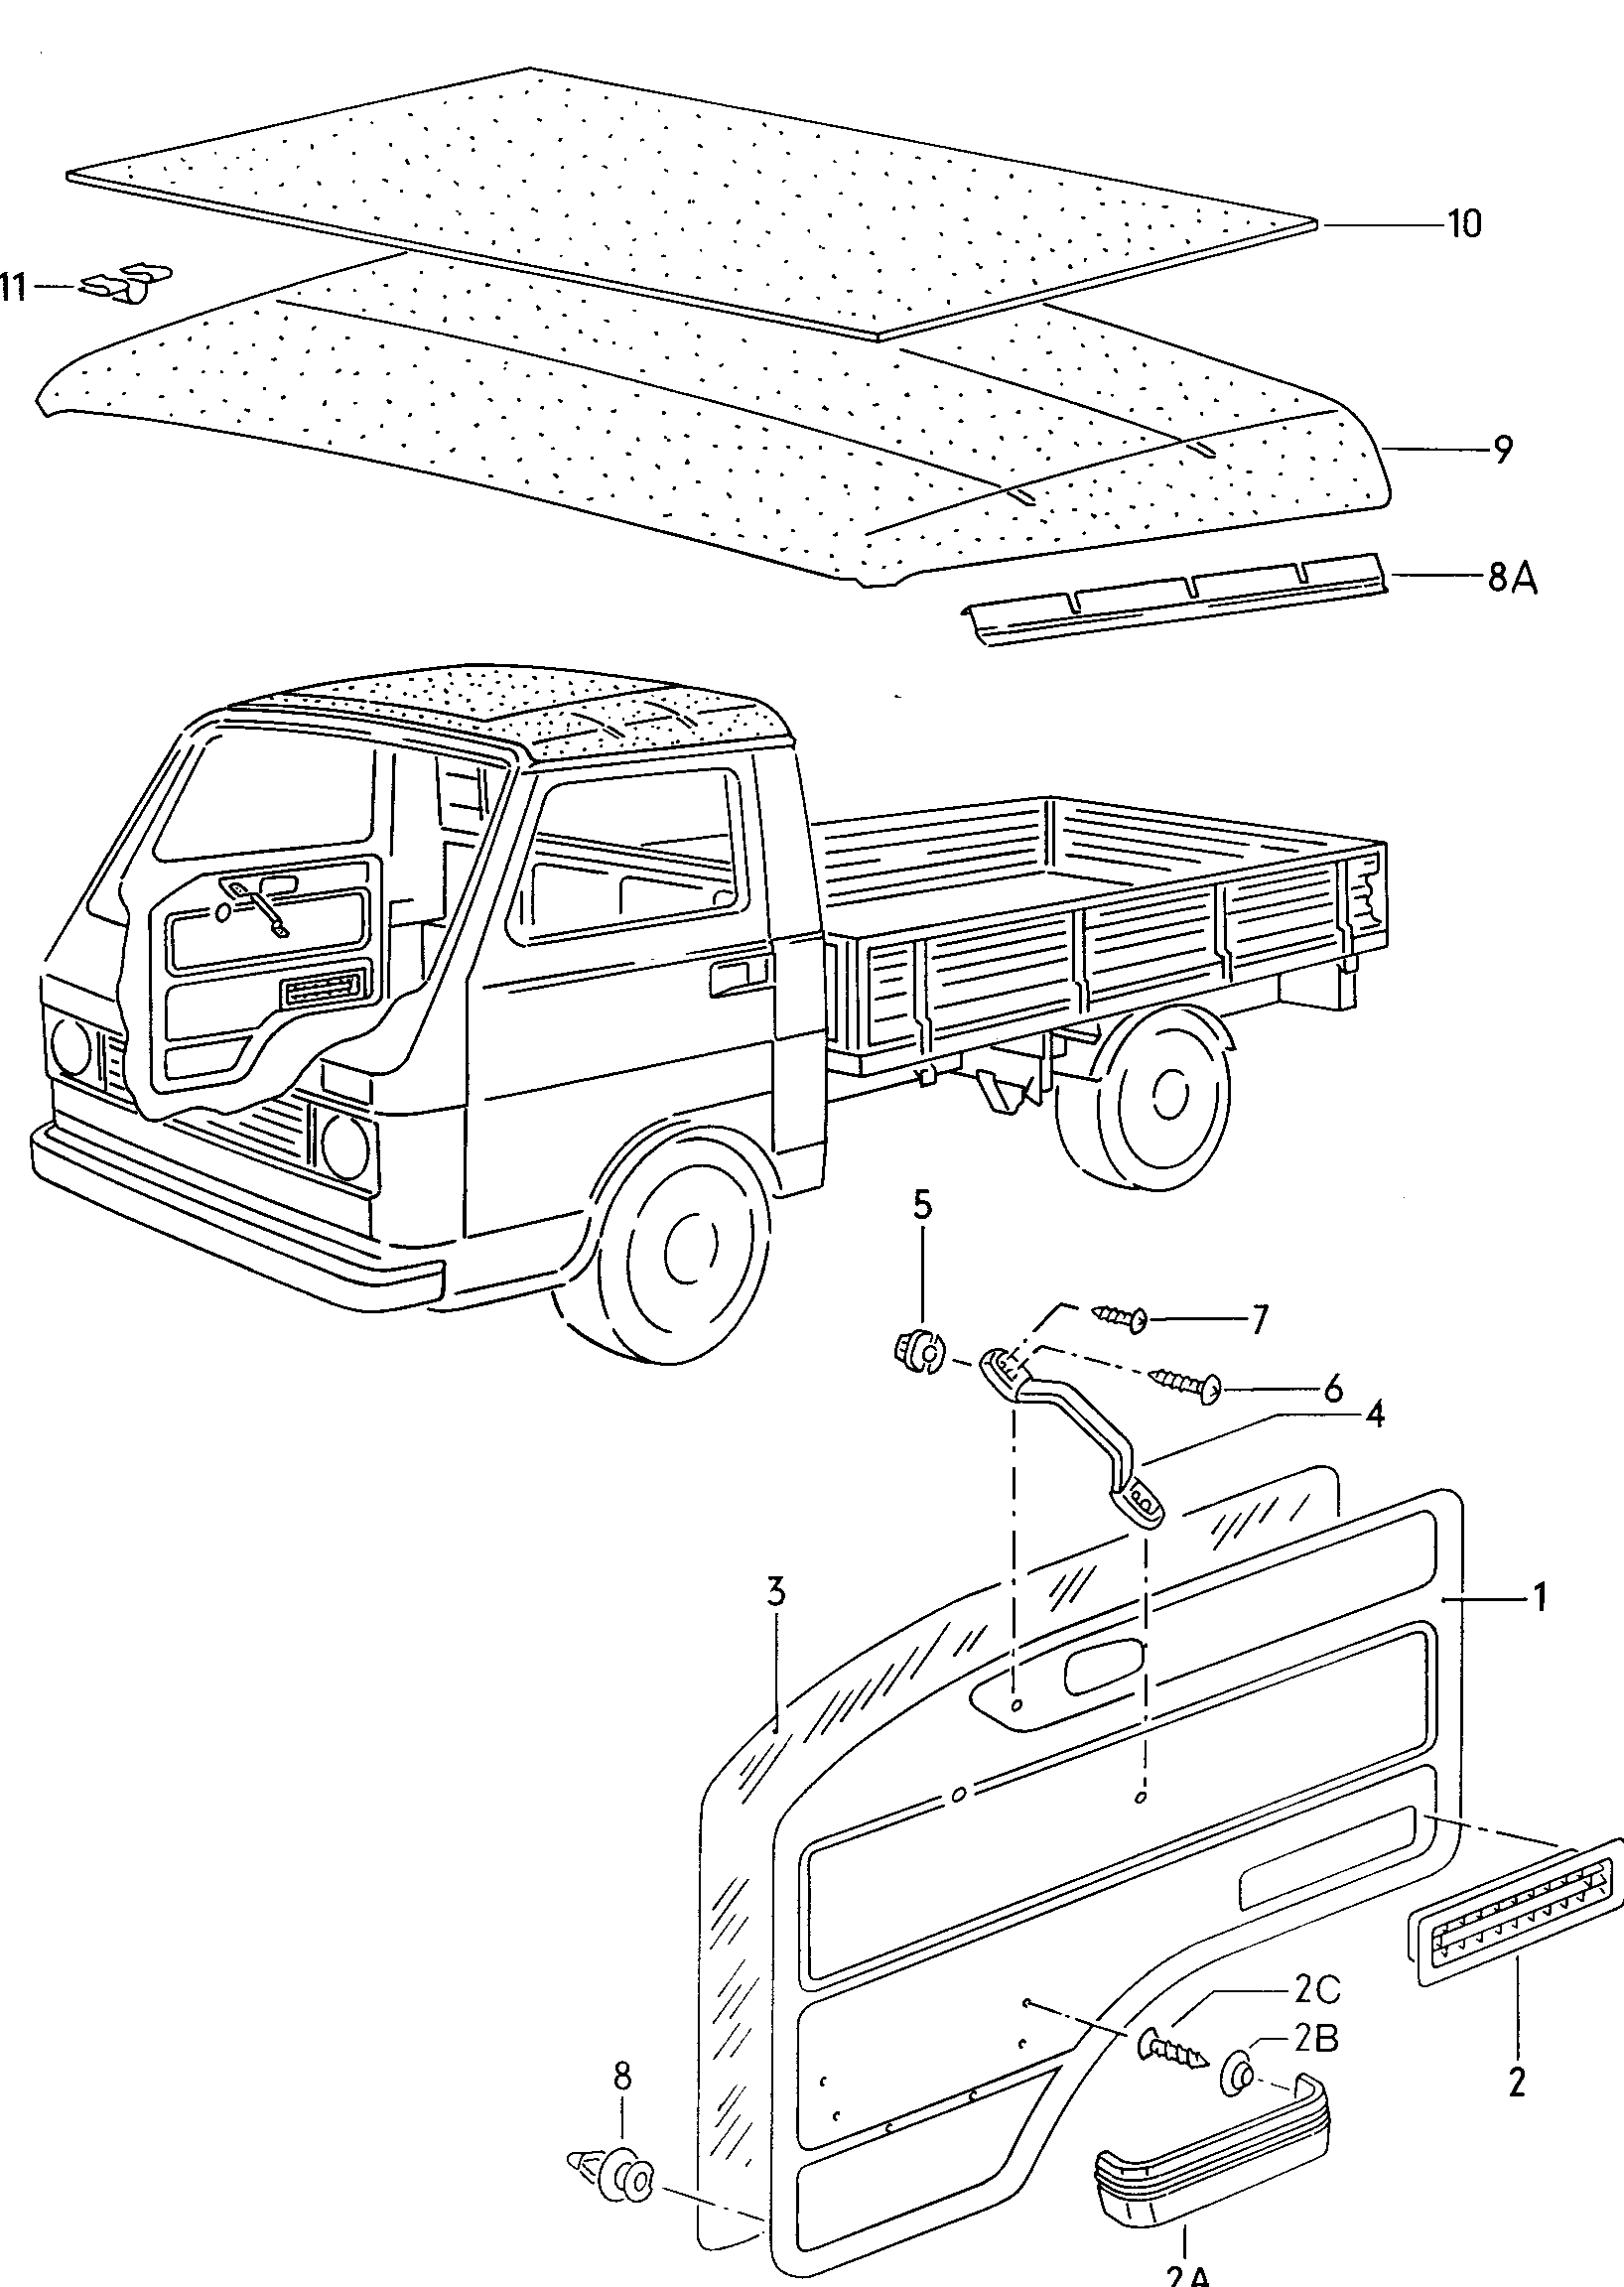 Revestimiento del techo cabina doblecamioneta - LT, LT 4x4 - lt